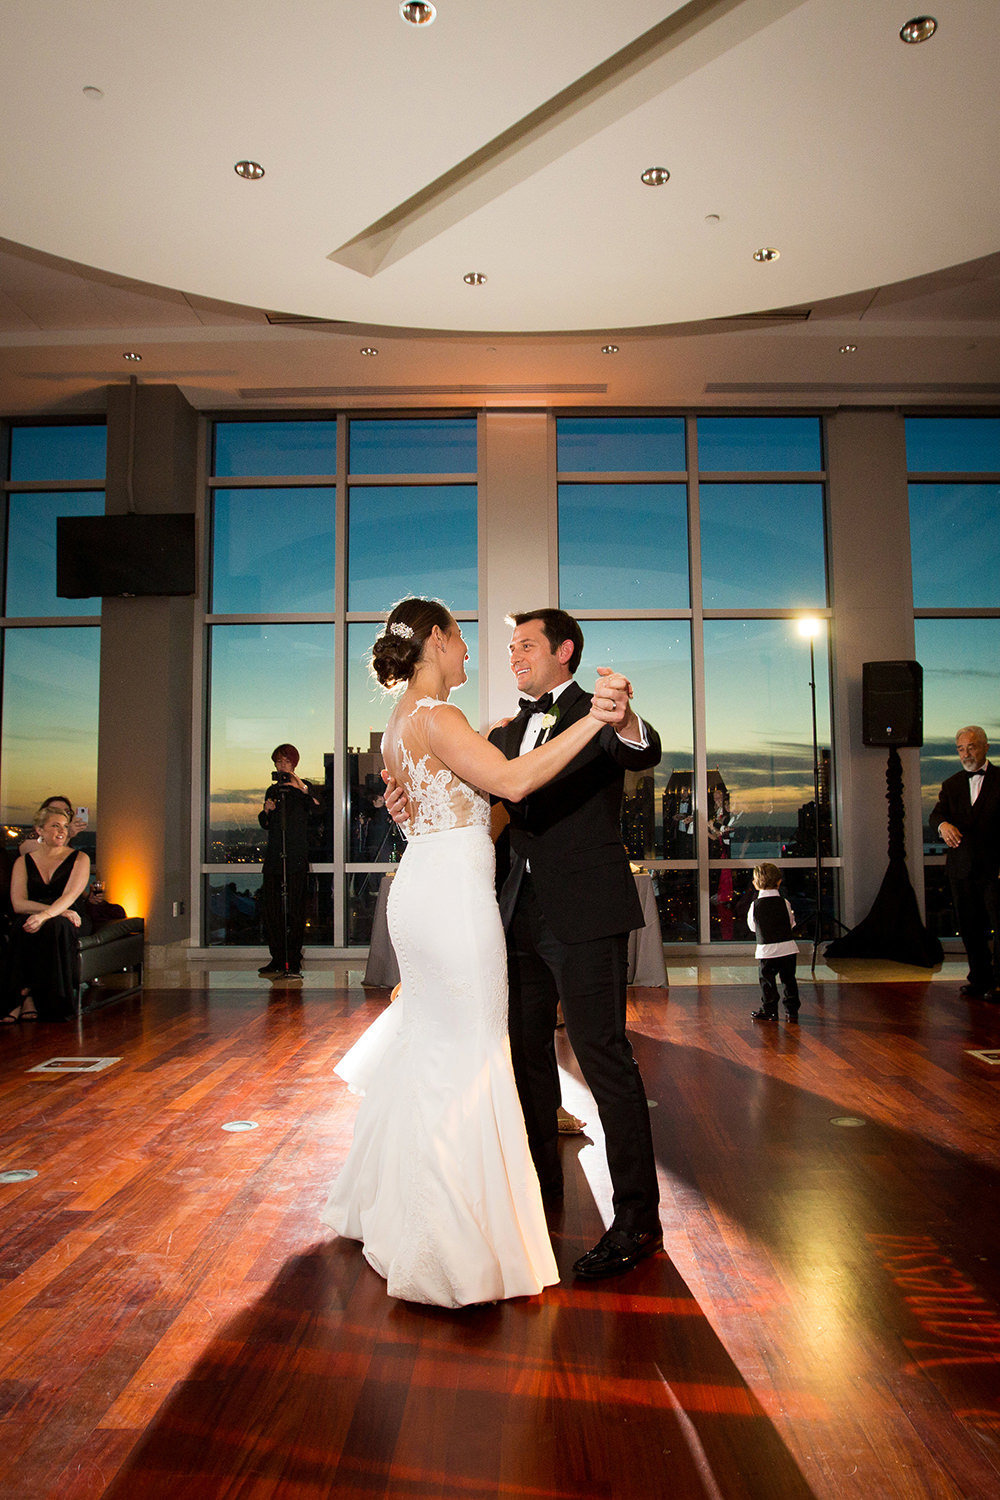 The first dance | Creative wedding photography reception lighting